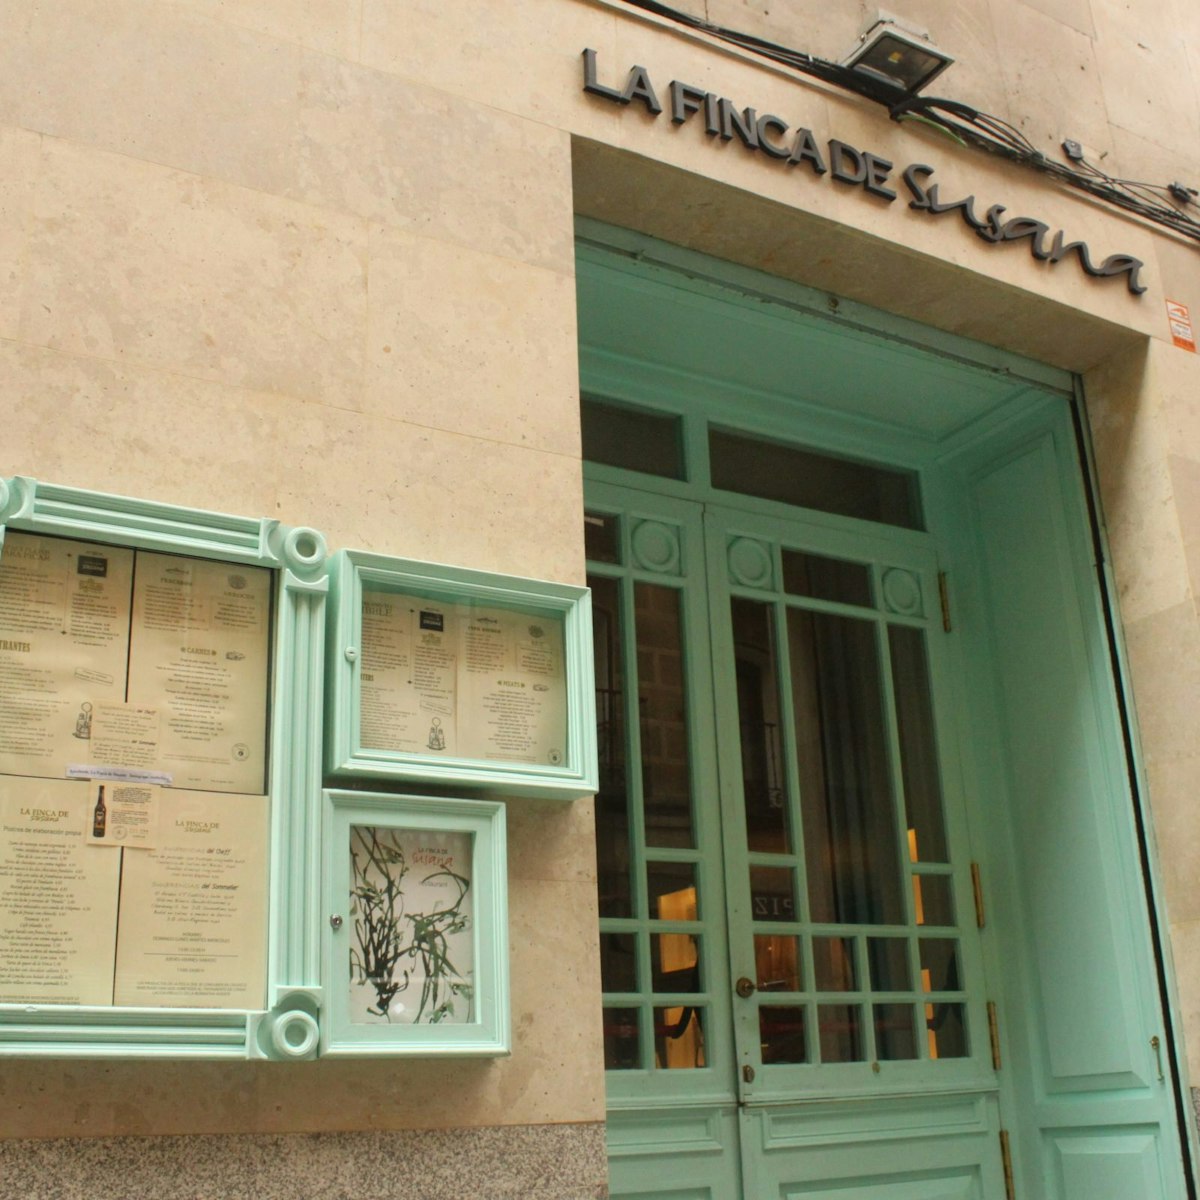 The entire menu is displayed outside of La Finca de Susana.